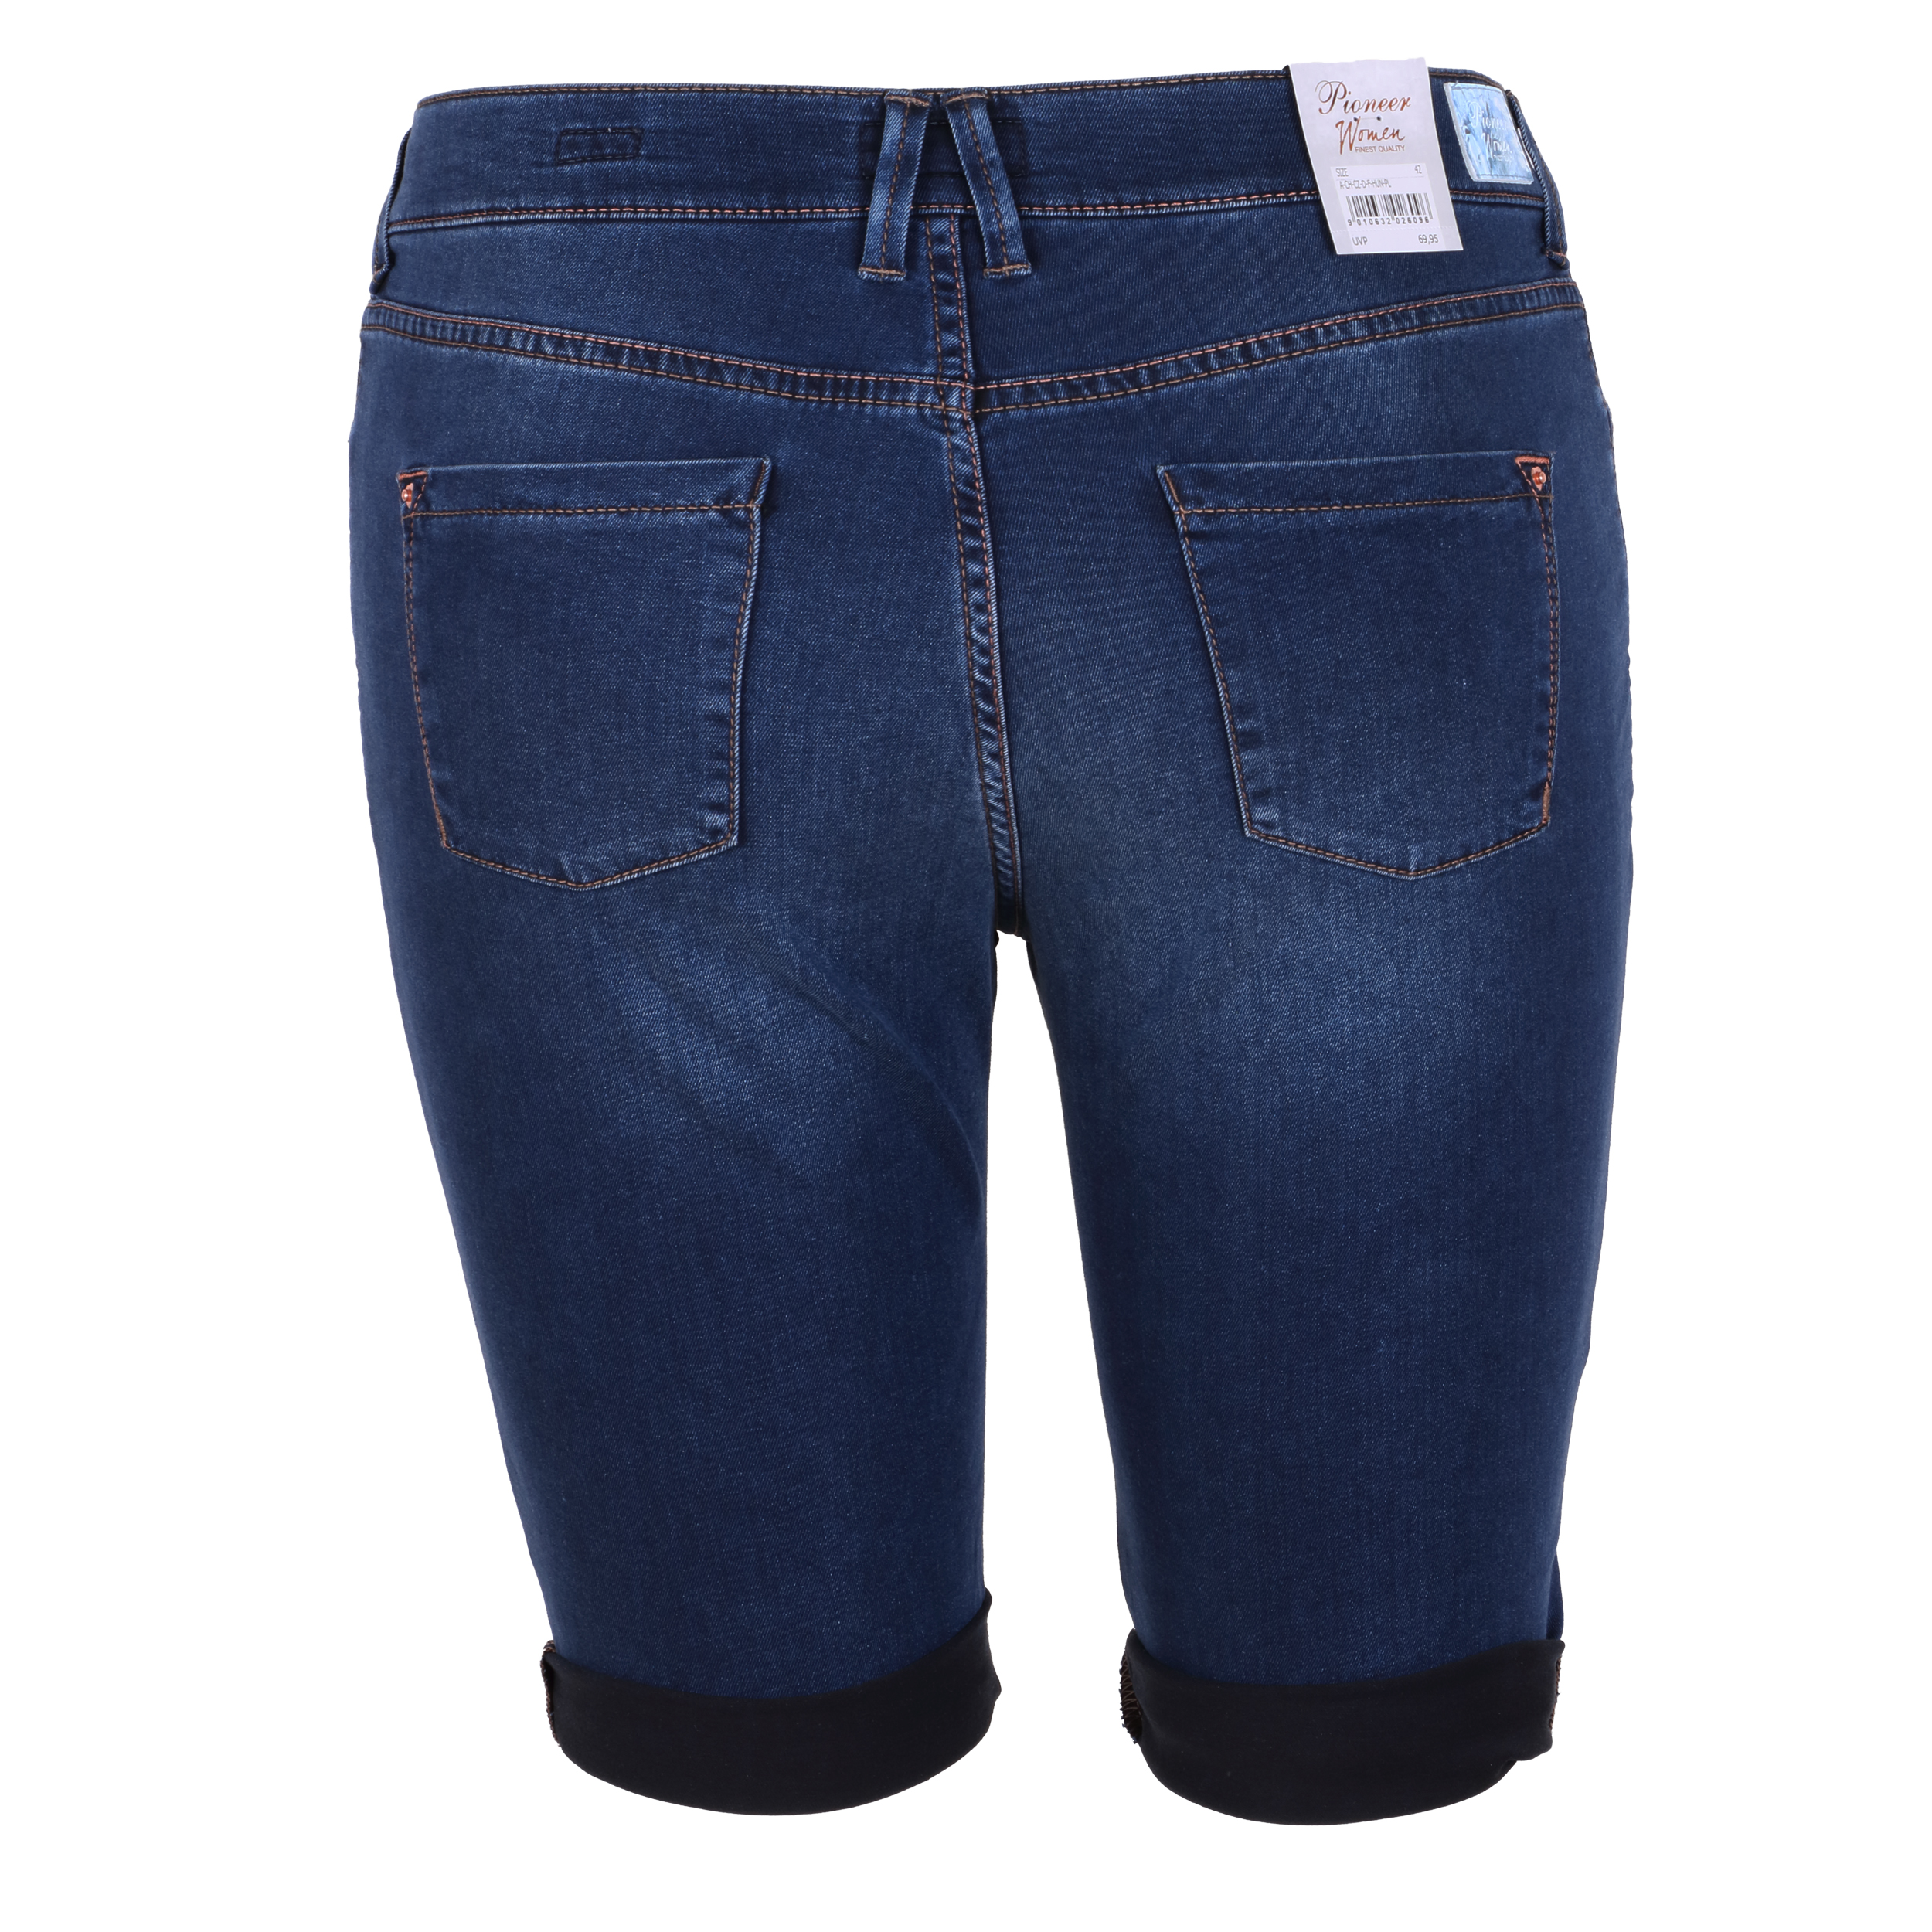 Pioneer Damen Jeans-Shorts 40 blau